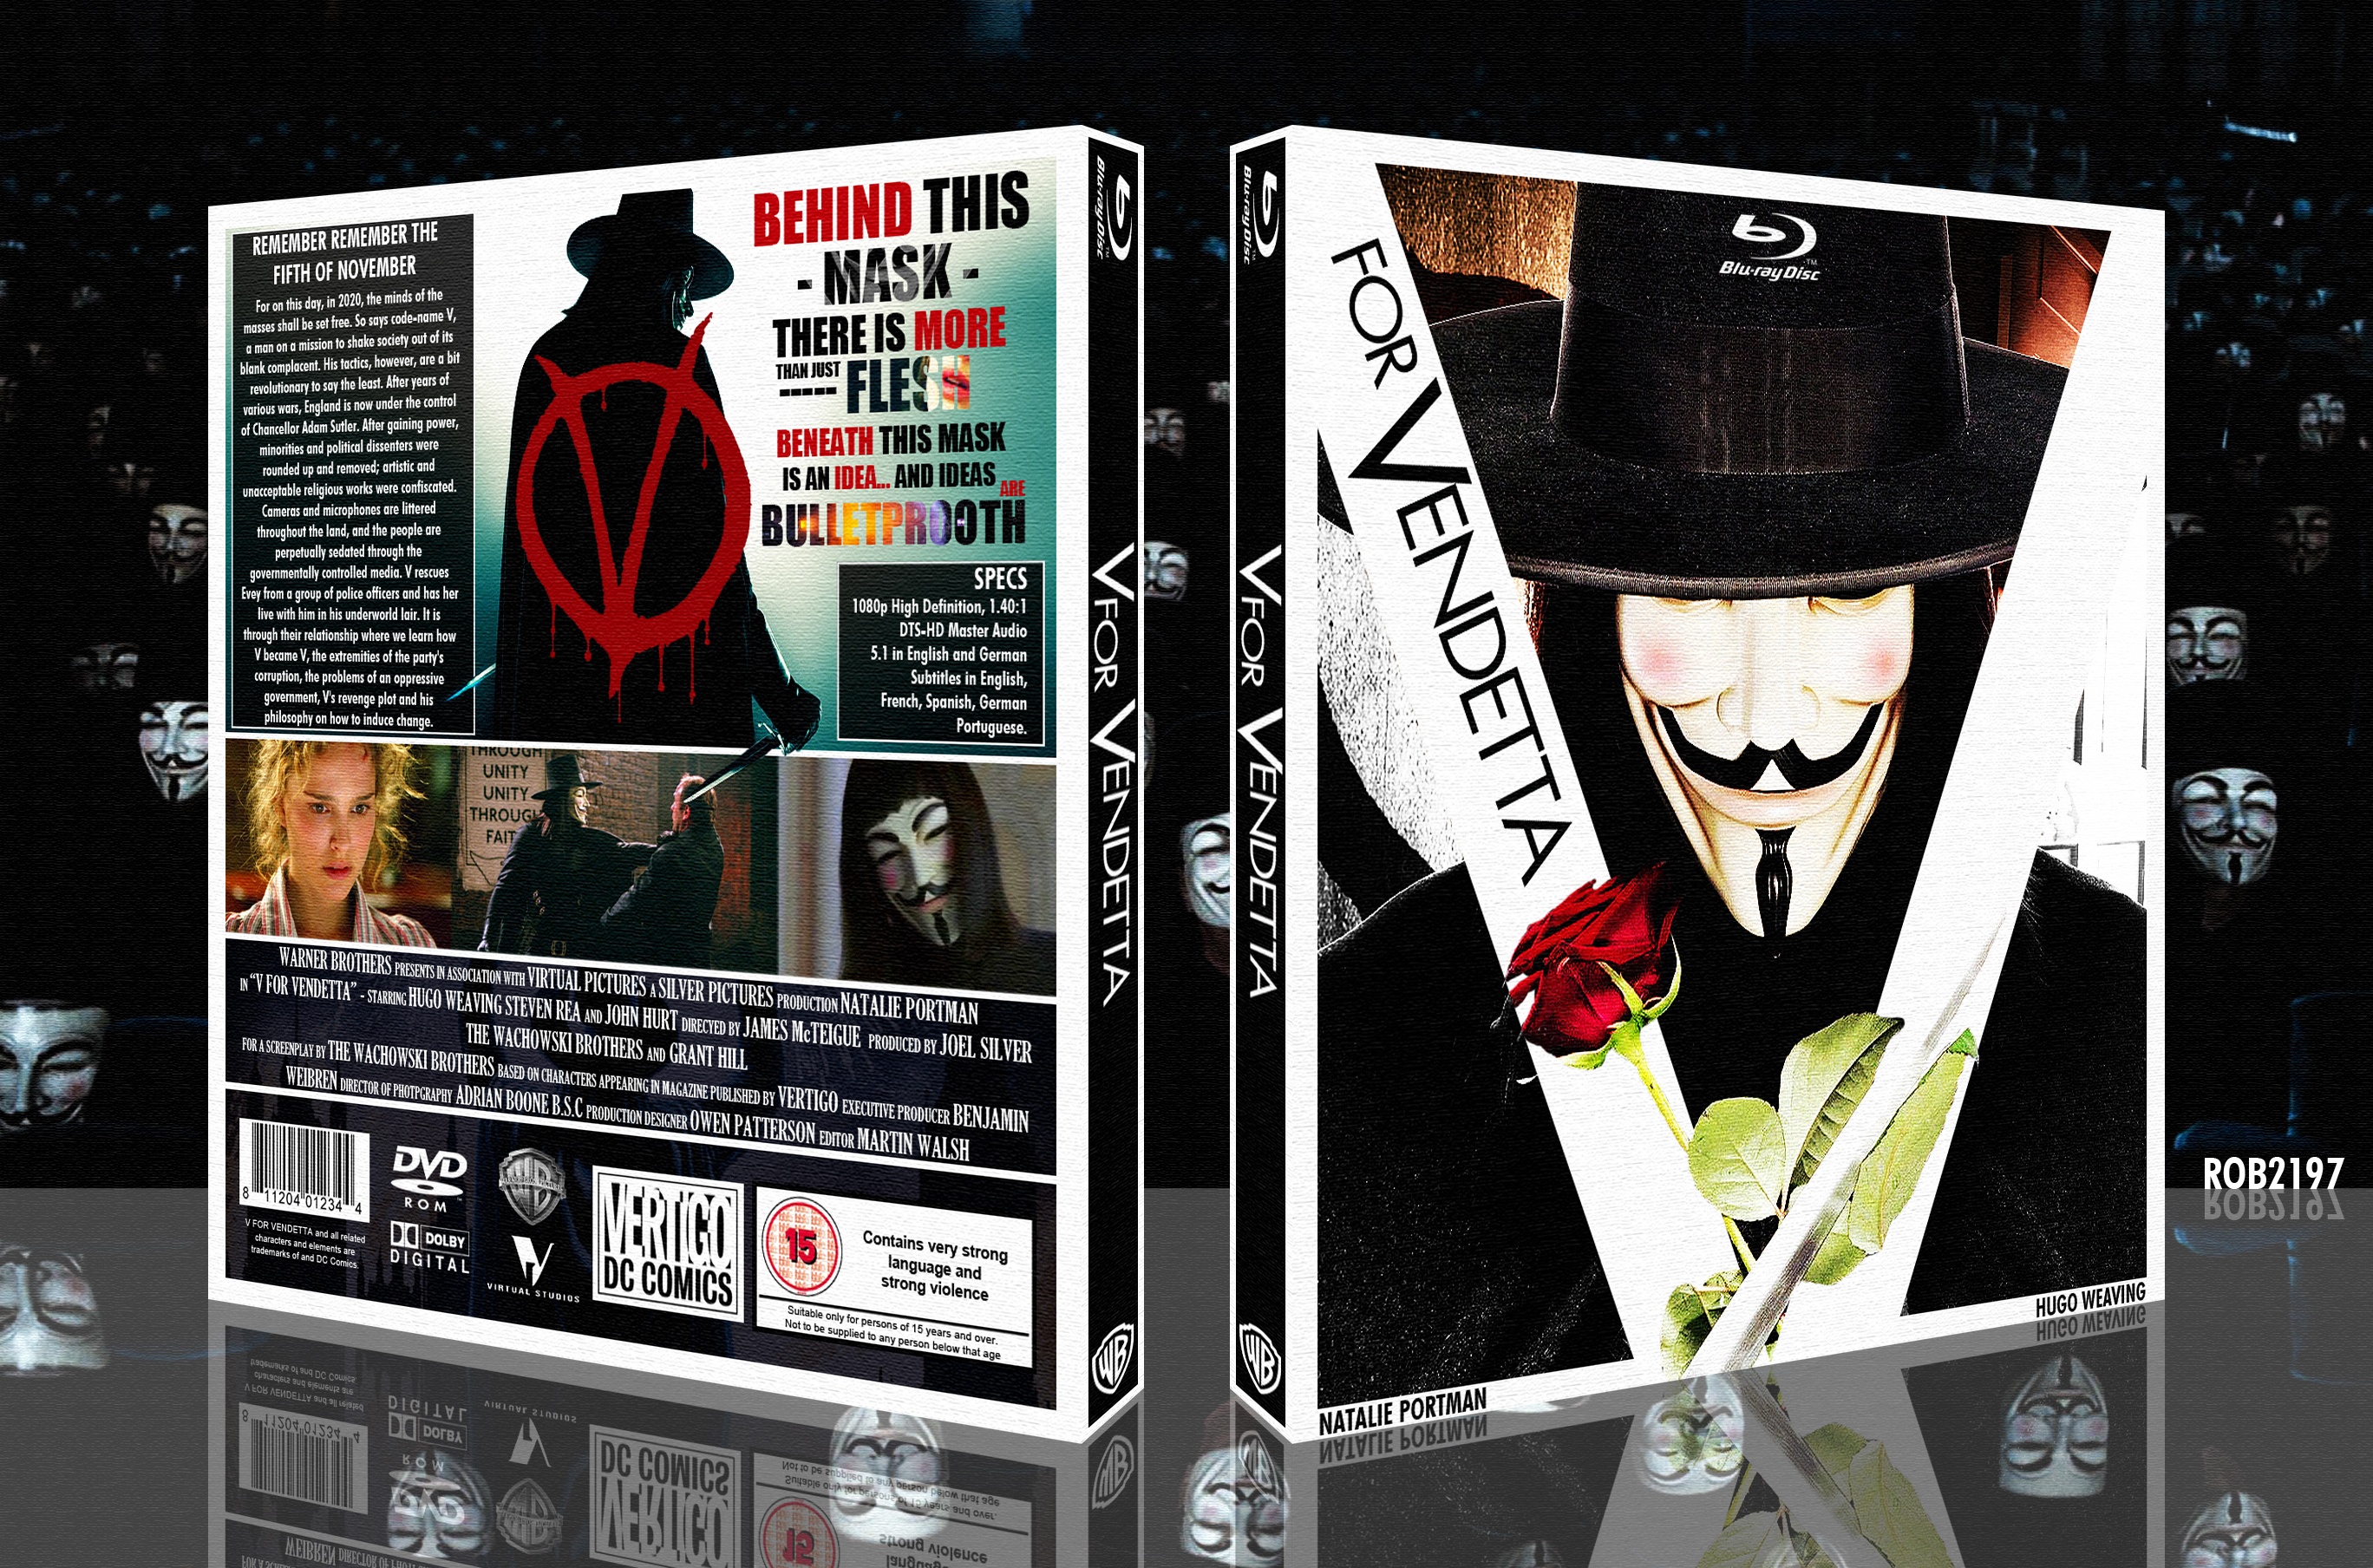 V for Vendetta box cover